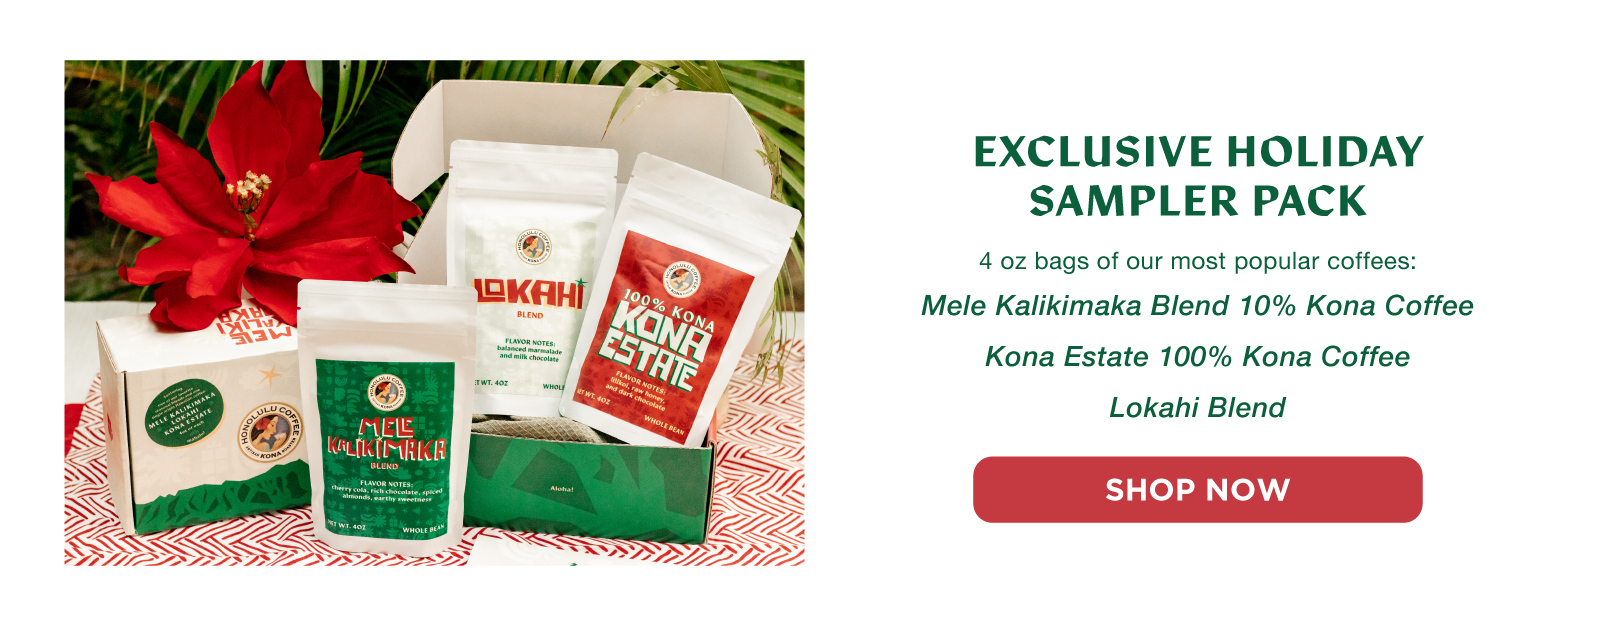 Exclusive holiday sampler pack - 4oz bags of Mele Kalikimaka, Kona Estate, and Lokahi